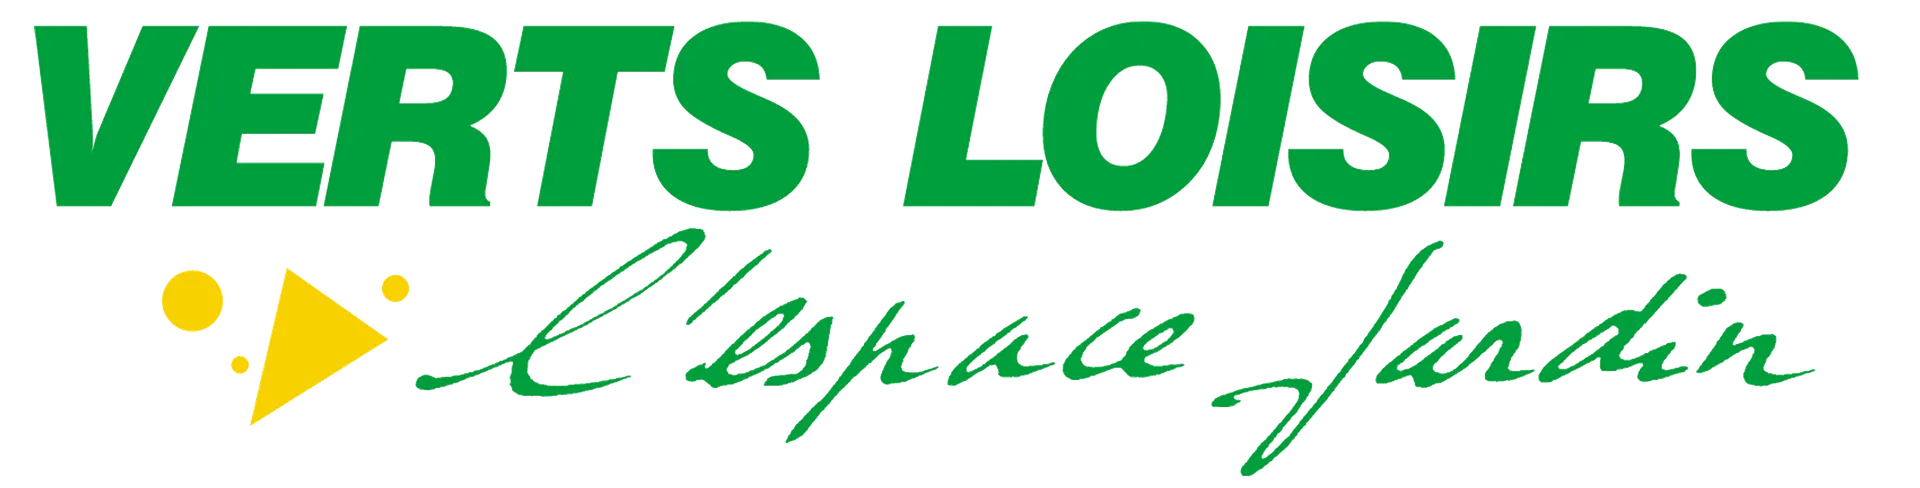 VERTS LOISIRS logo du catalogue